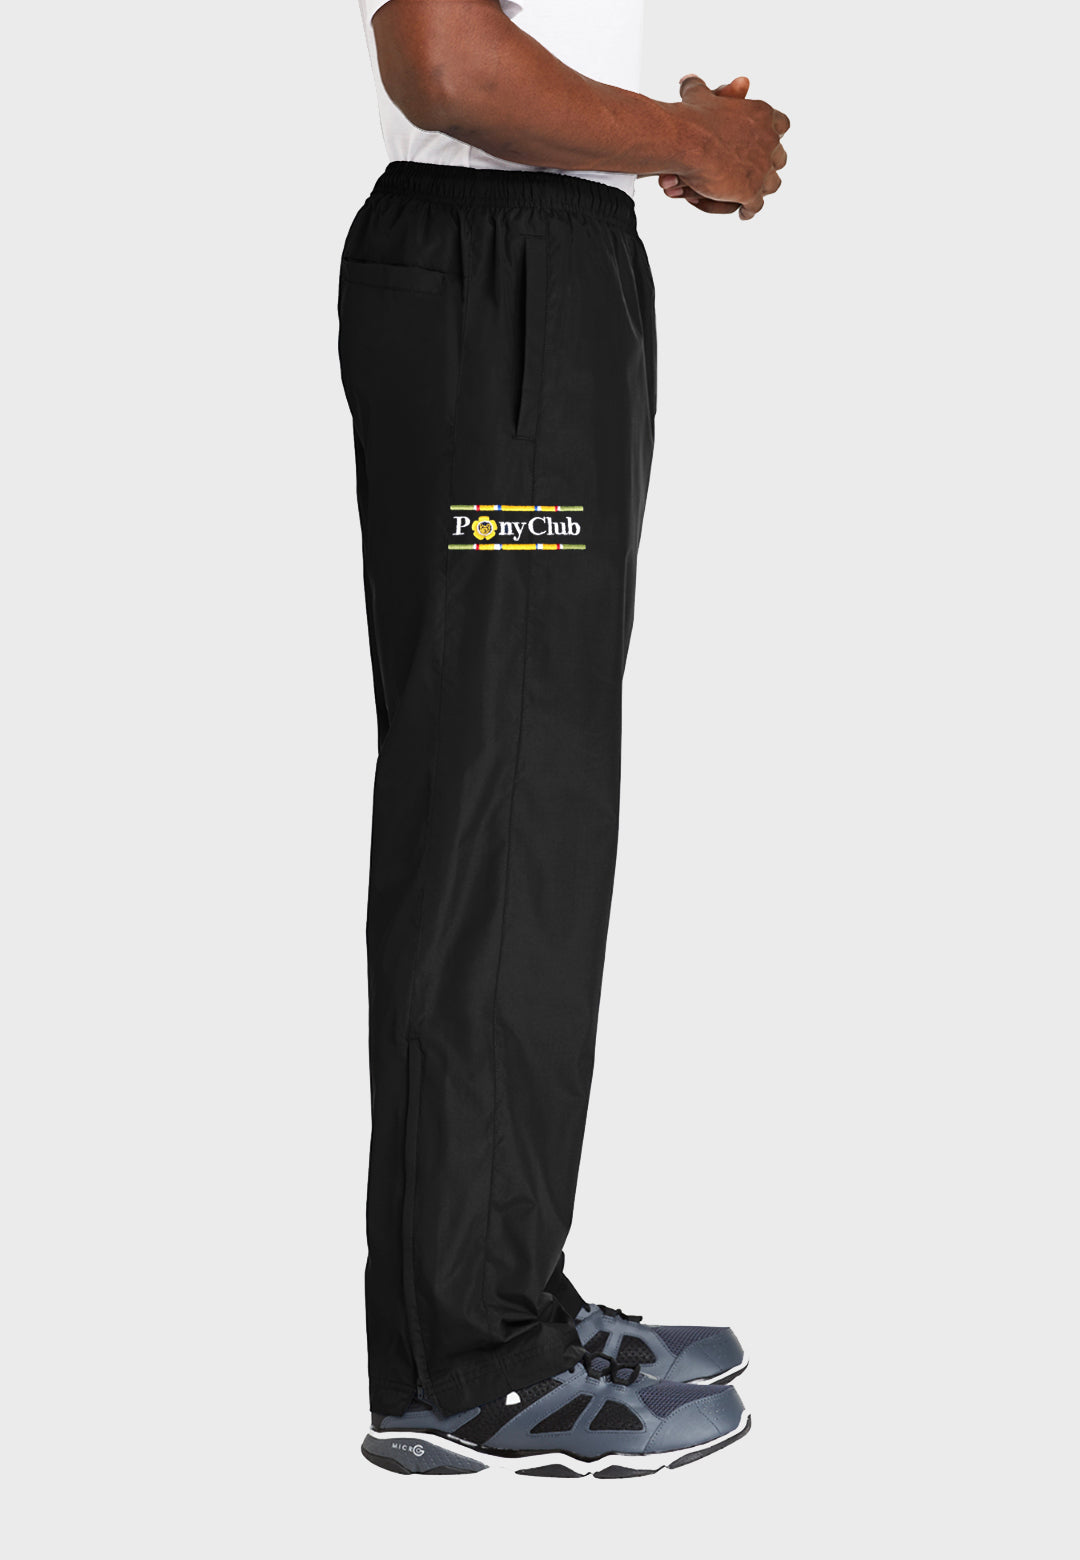 Southern CA USPC Sport-Tek® Black Pull-On Wind Pant (Unisex) - Adult + Youth Sizes